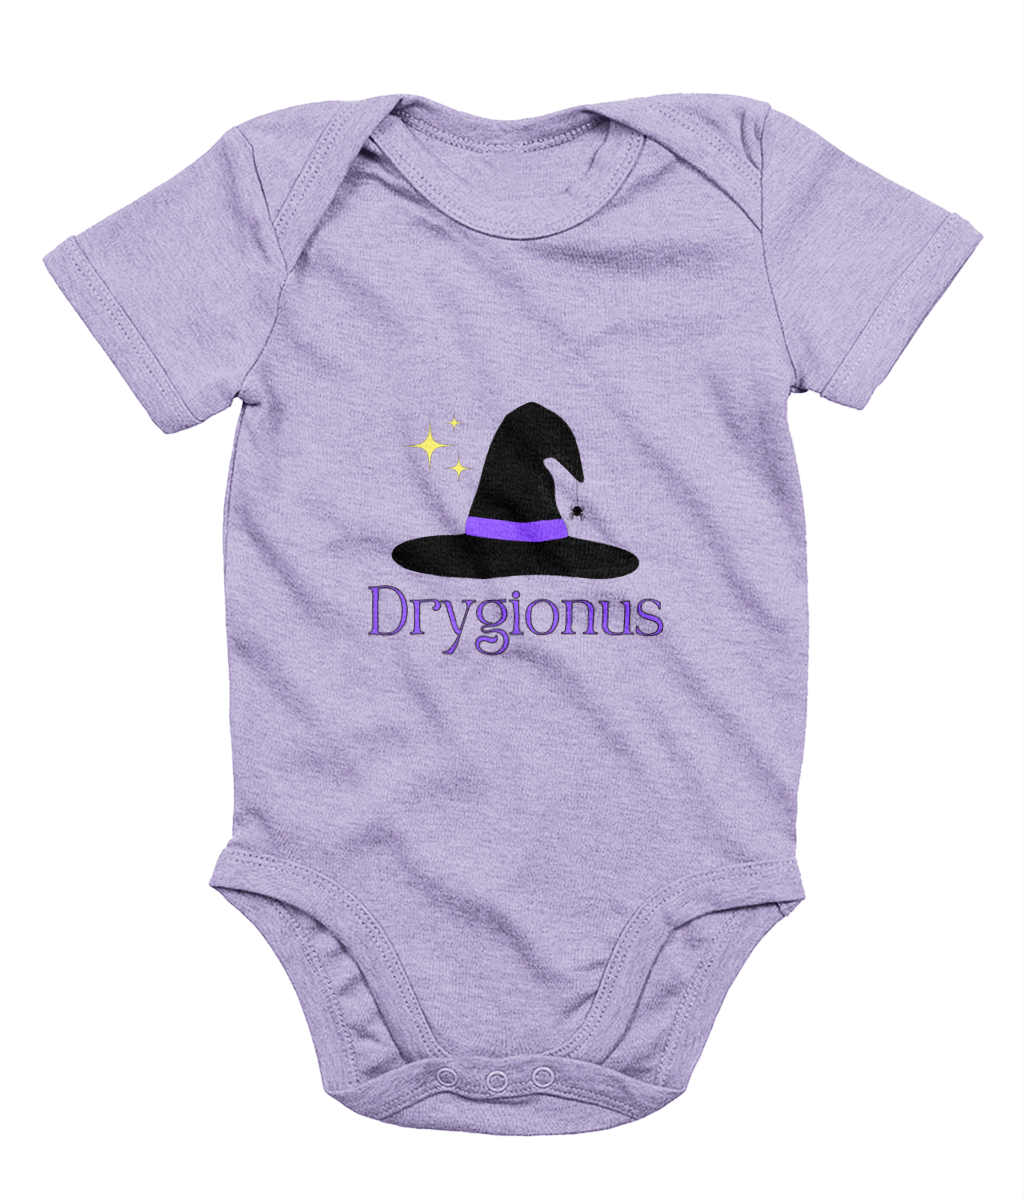 Drygionus Welsh language Bodysuit | Welsh Babygrow